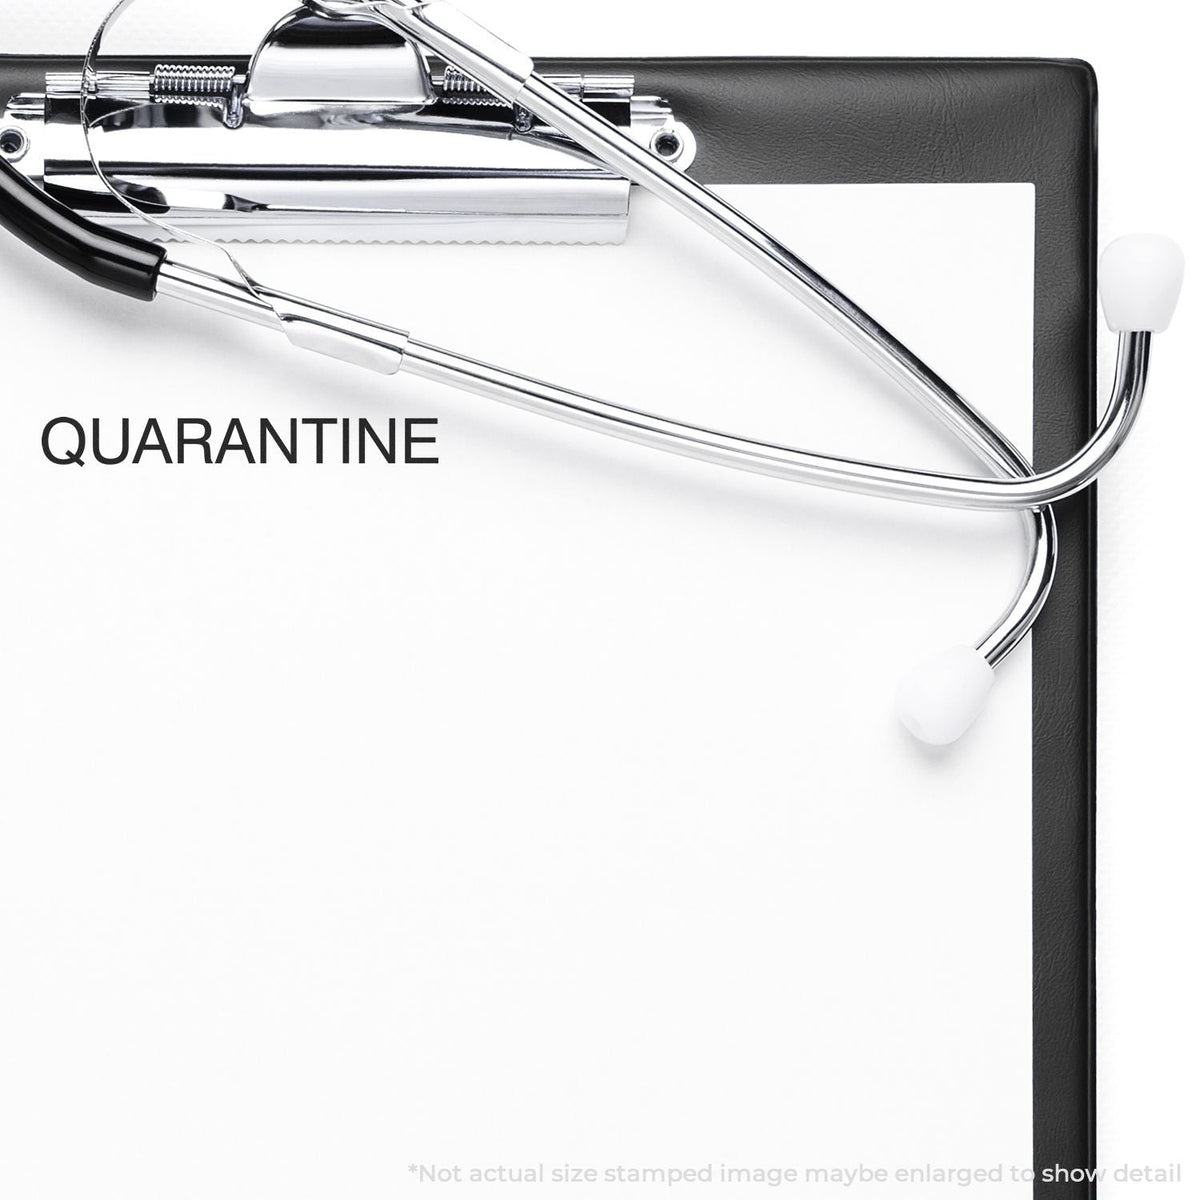 In Use Self-Inking Quarantine Stamp Image